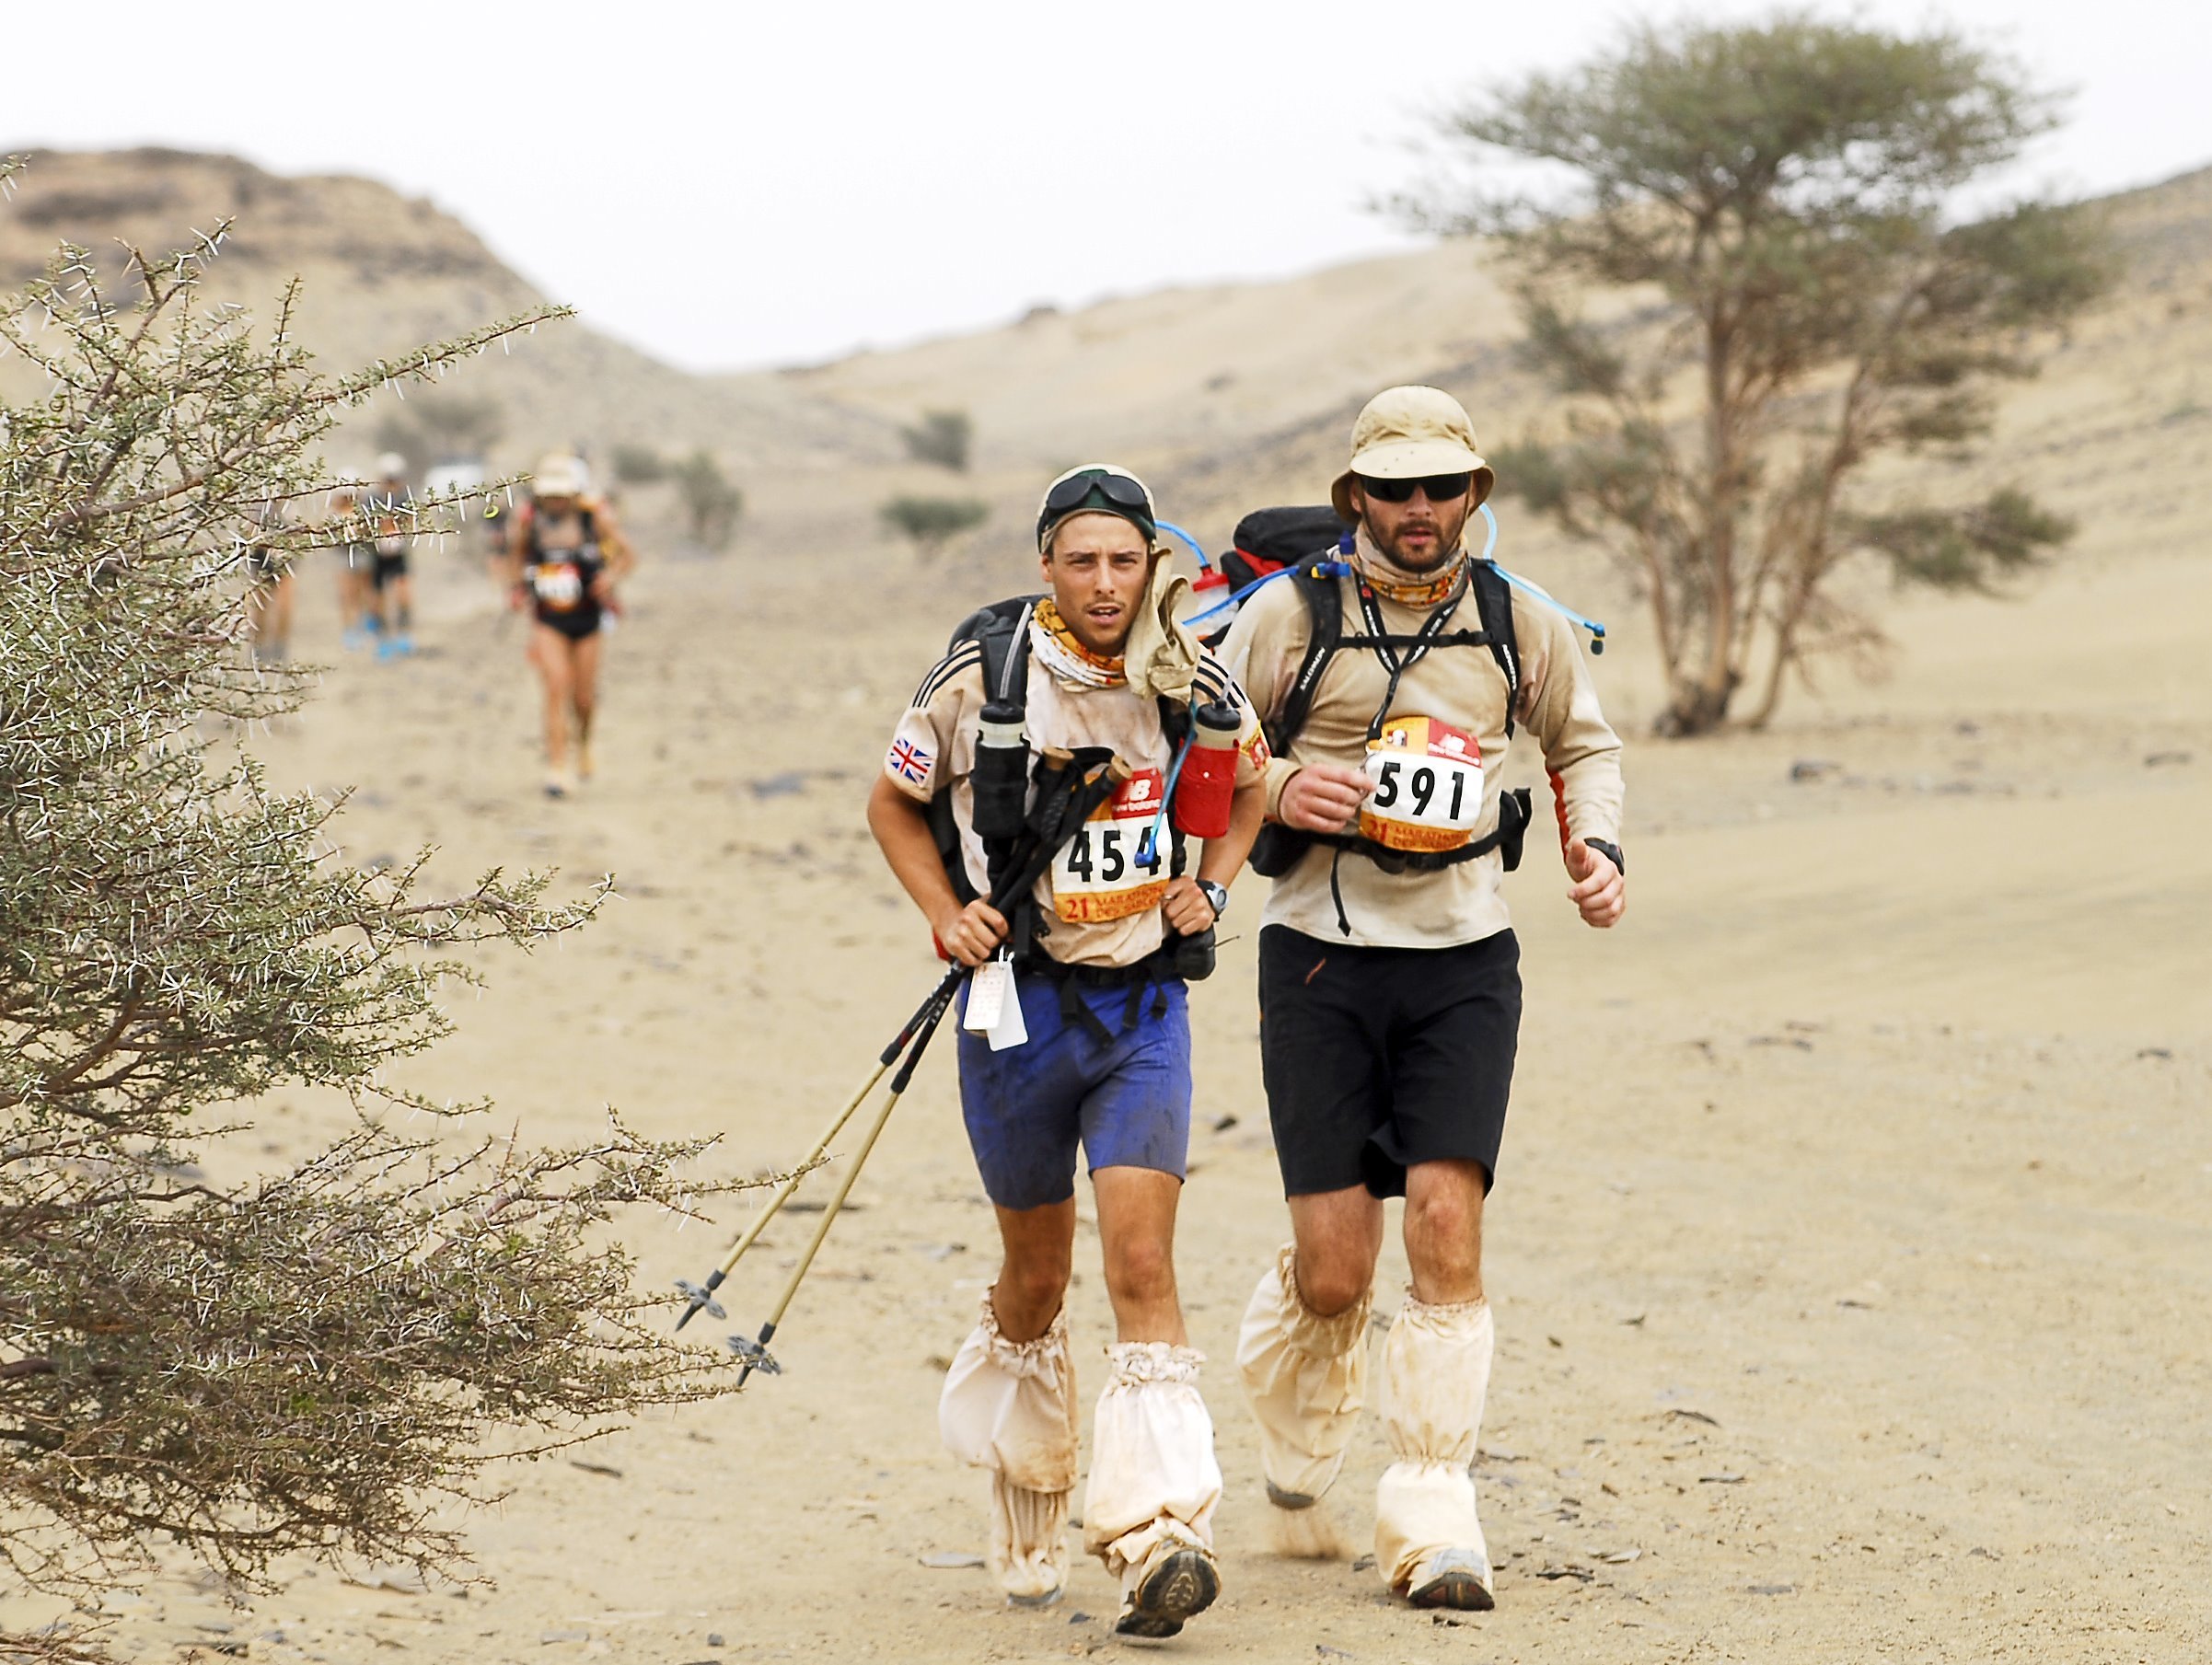 David taking part in the Marathons des Sables in the Sahara Desert.